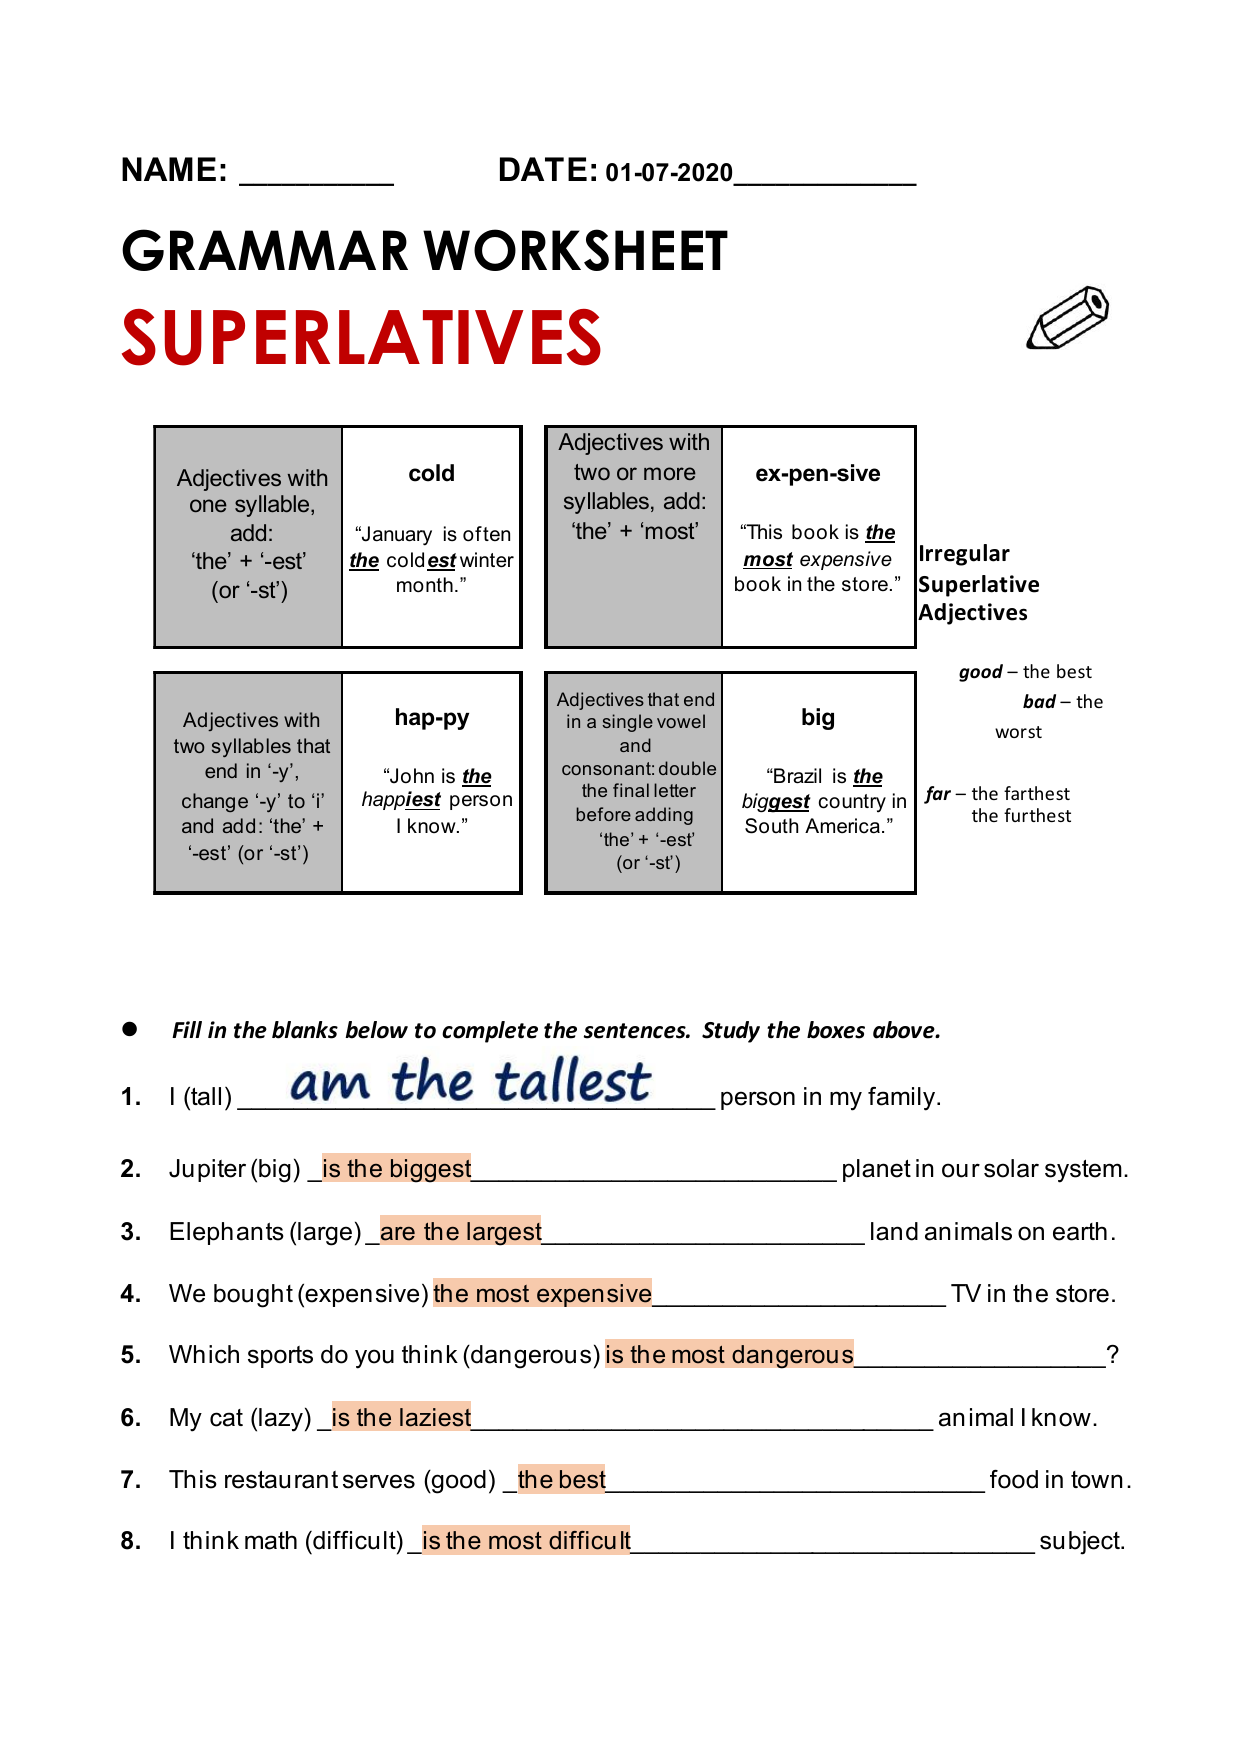 superlative-adjective-worksheet